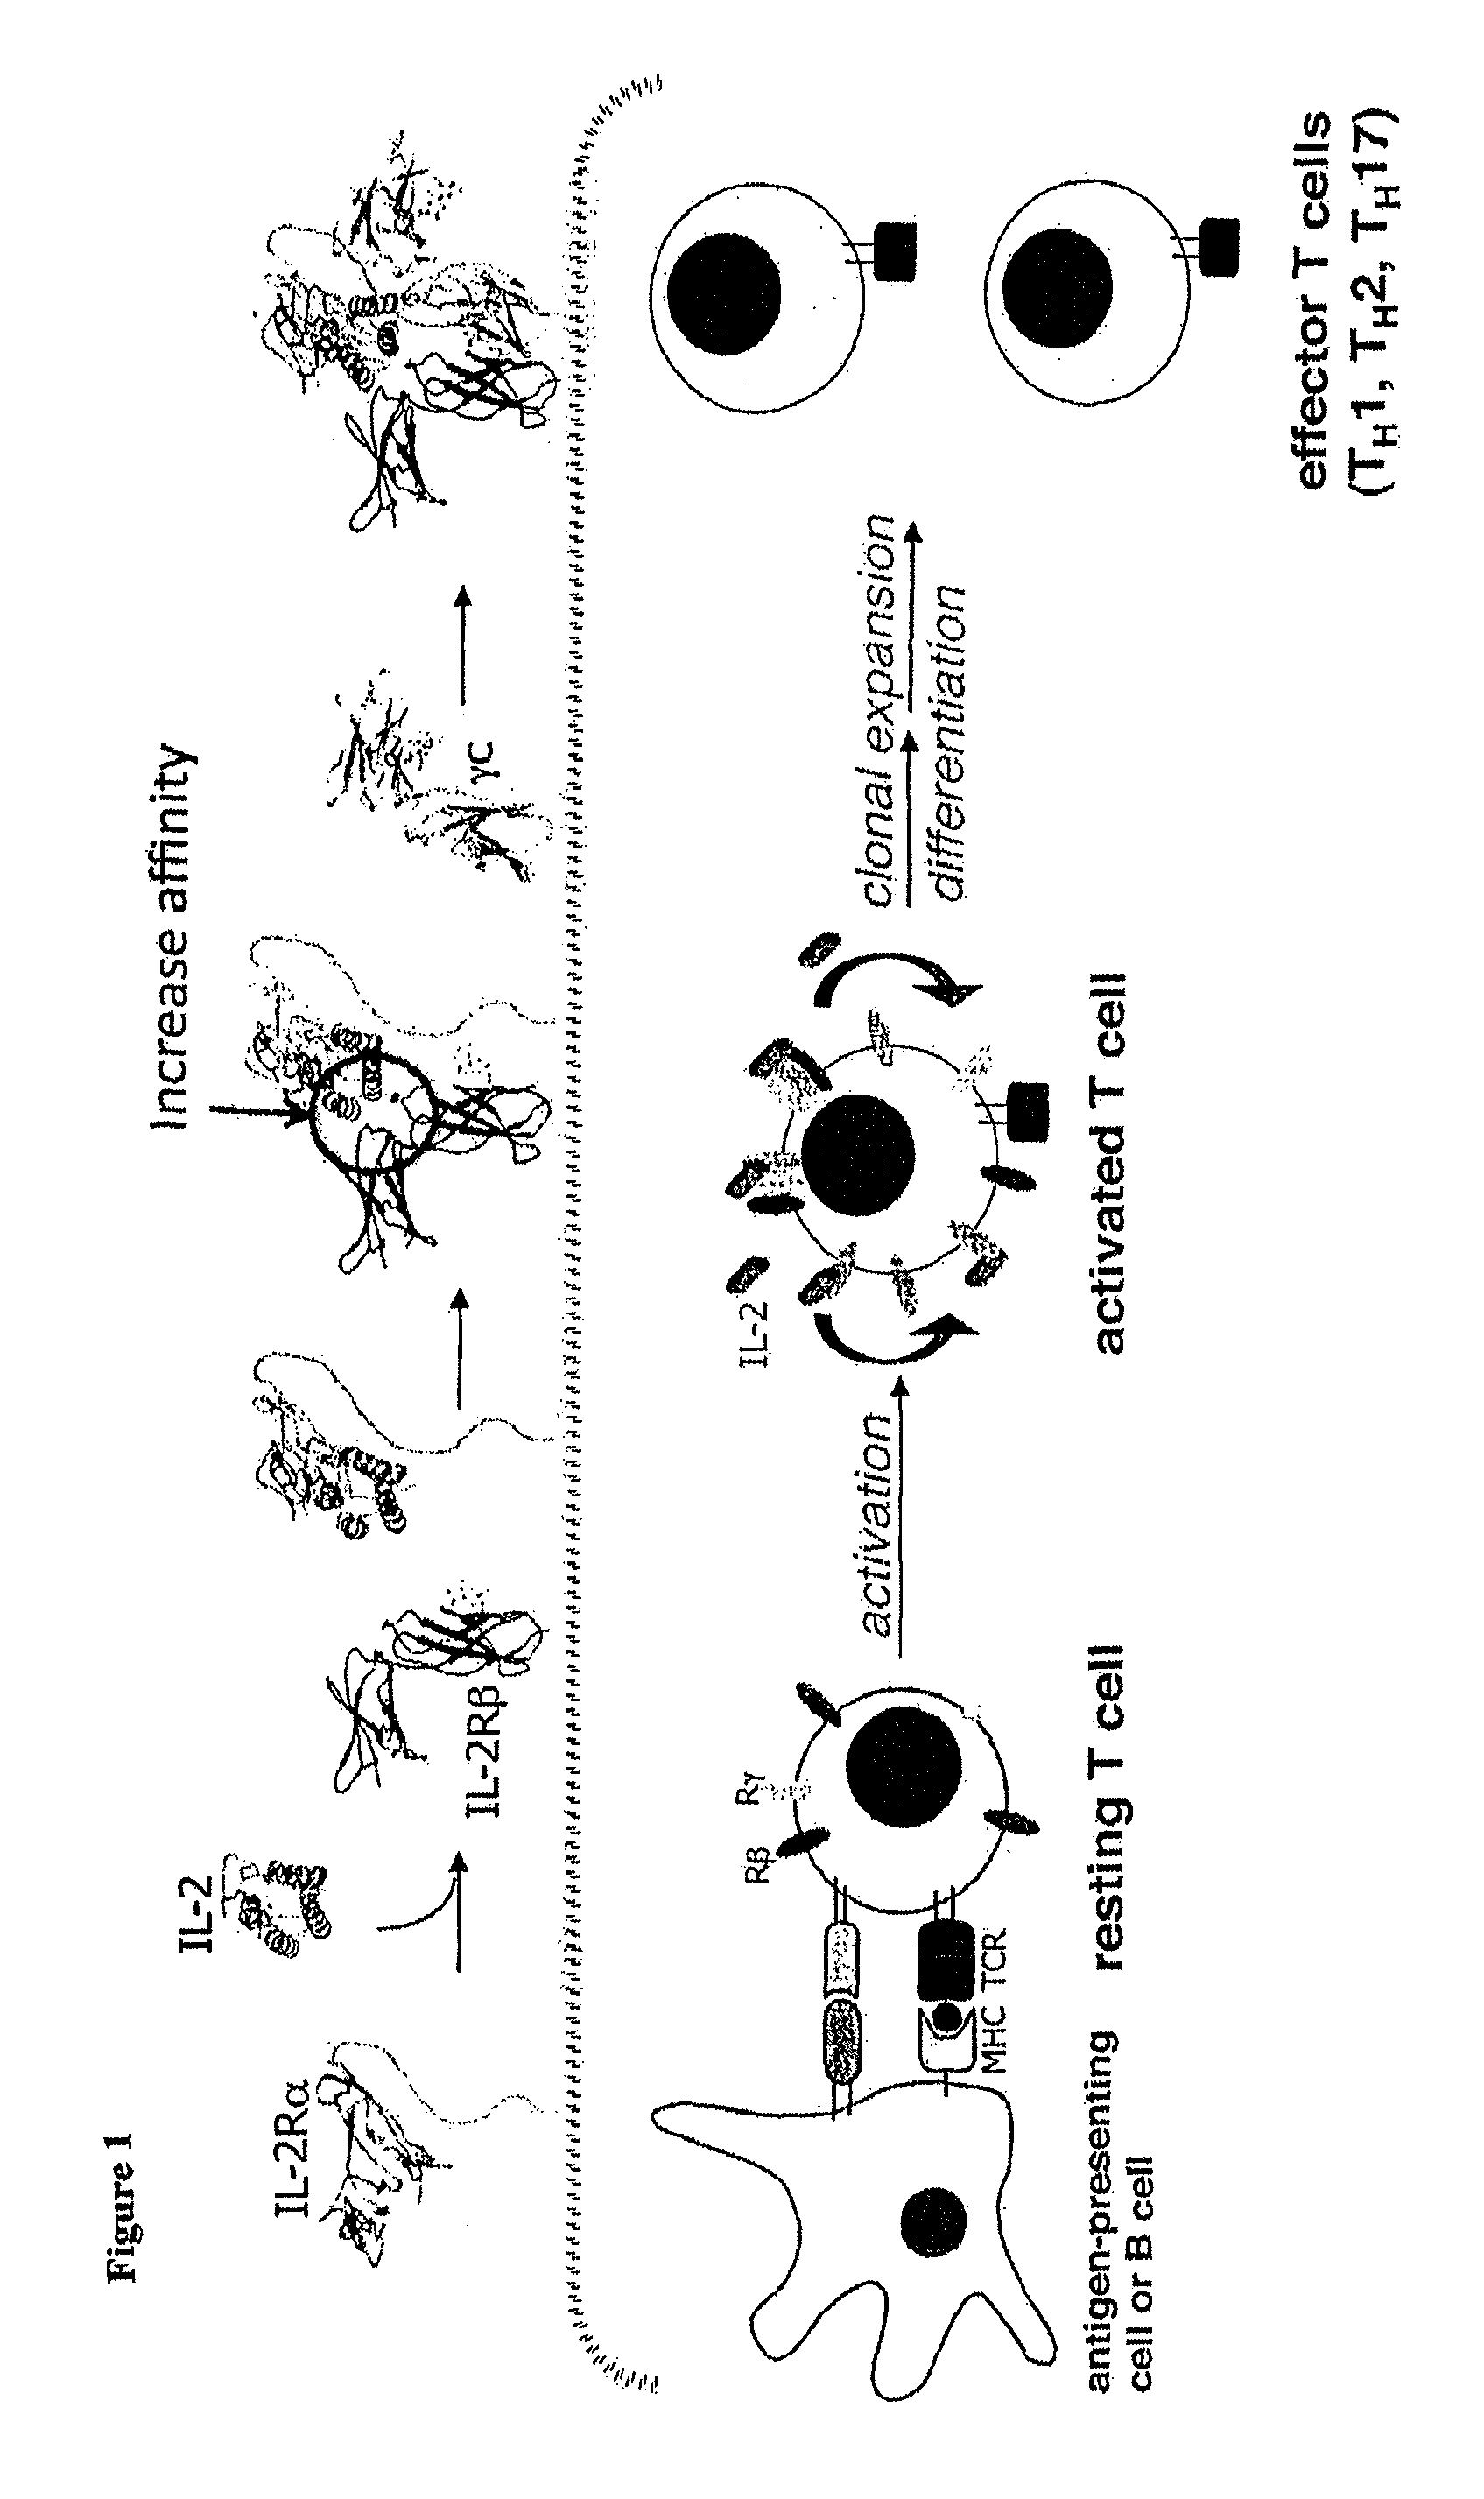 Antagonists of interleukin-2 receptor